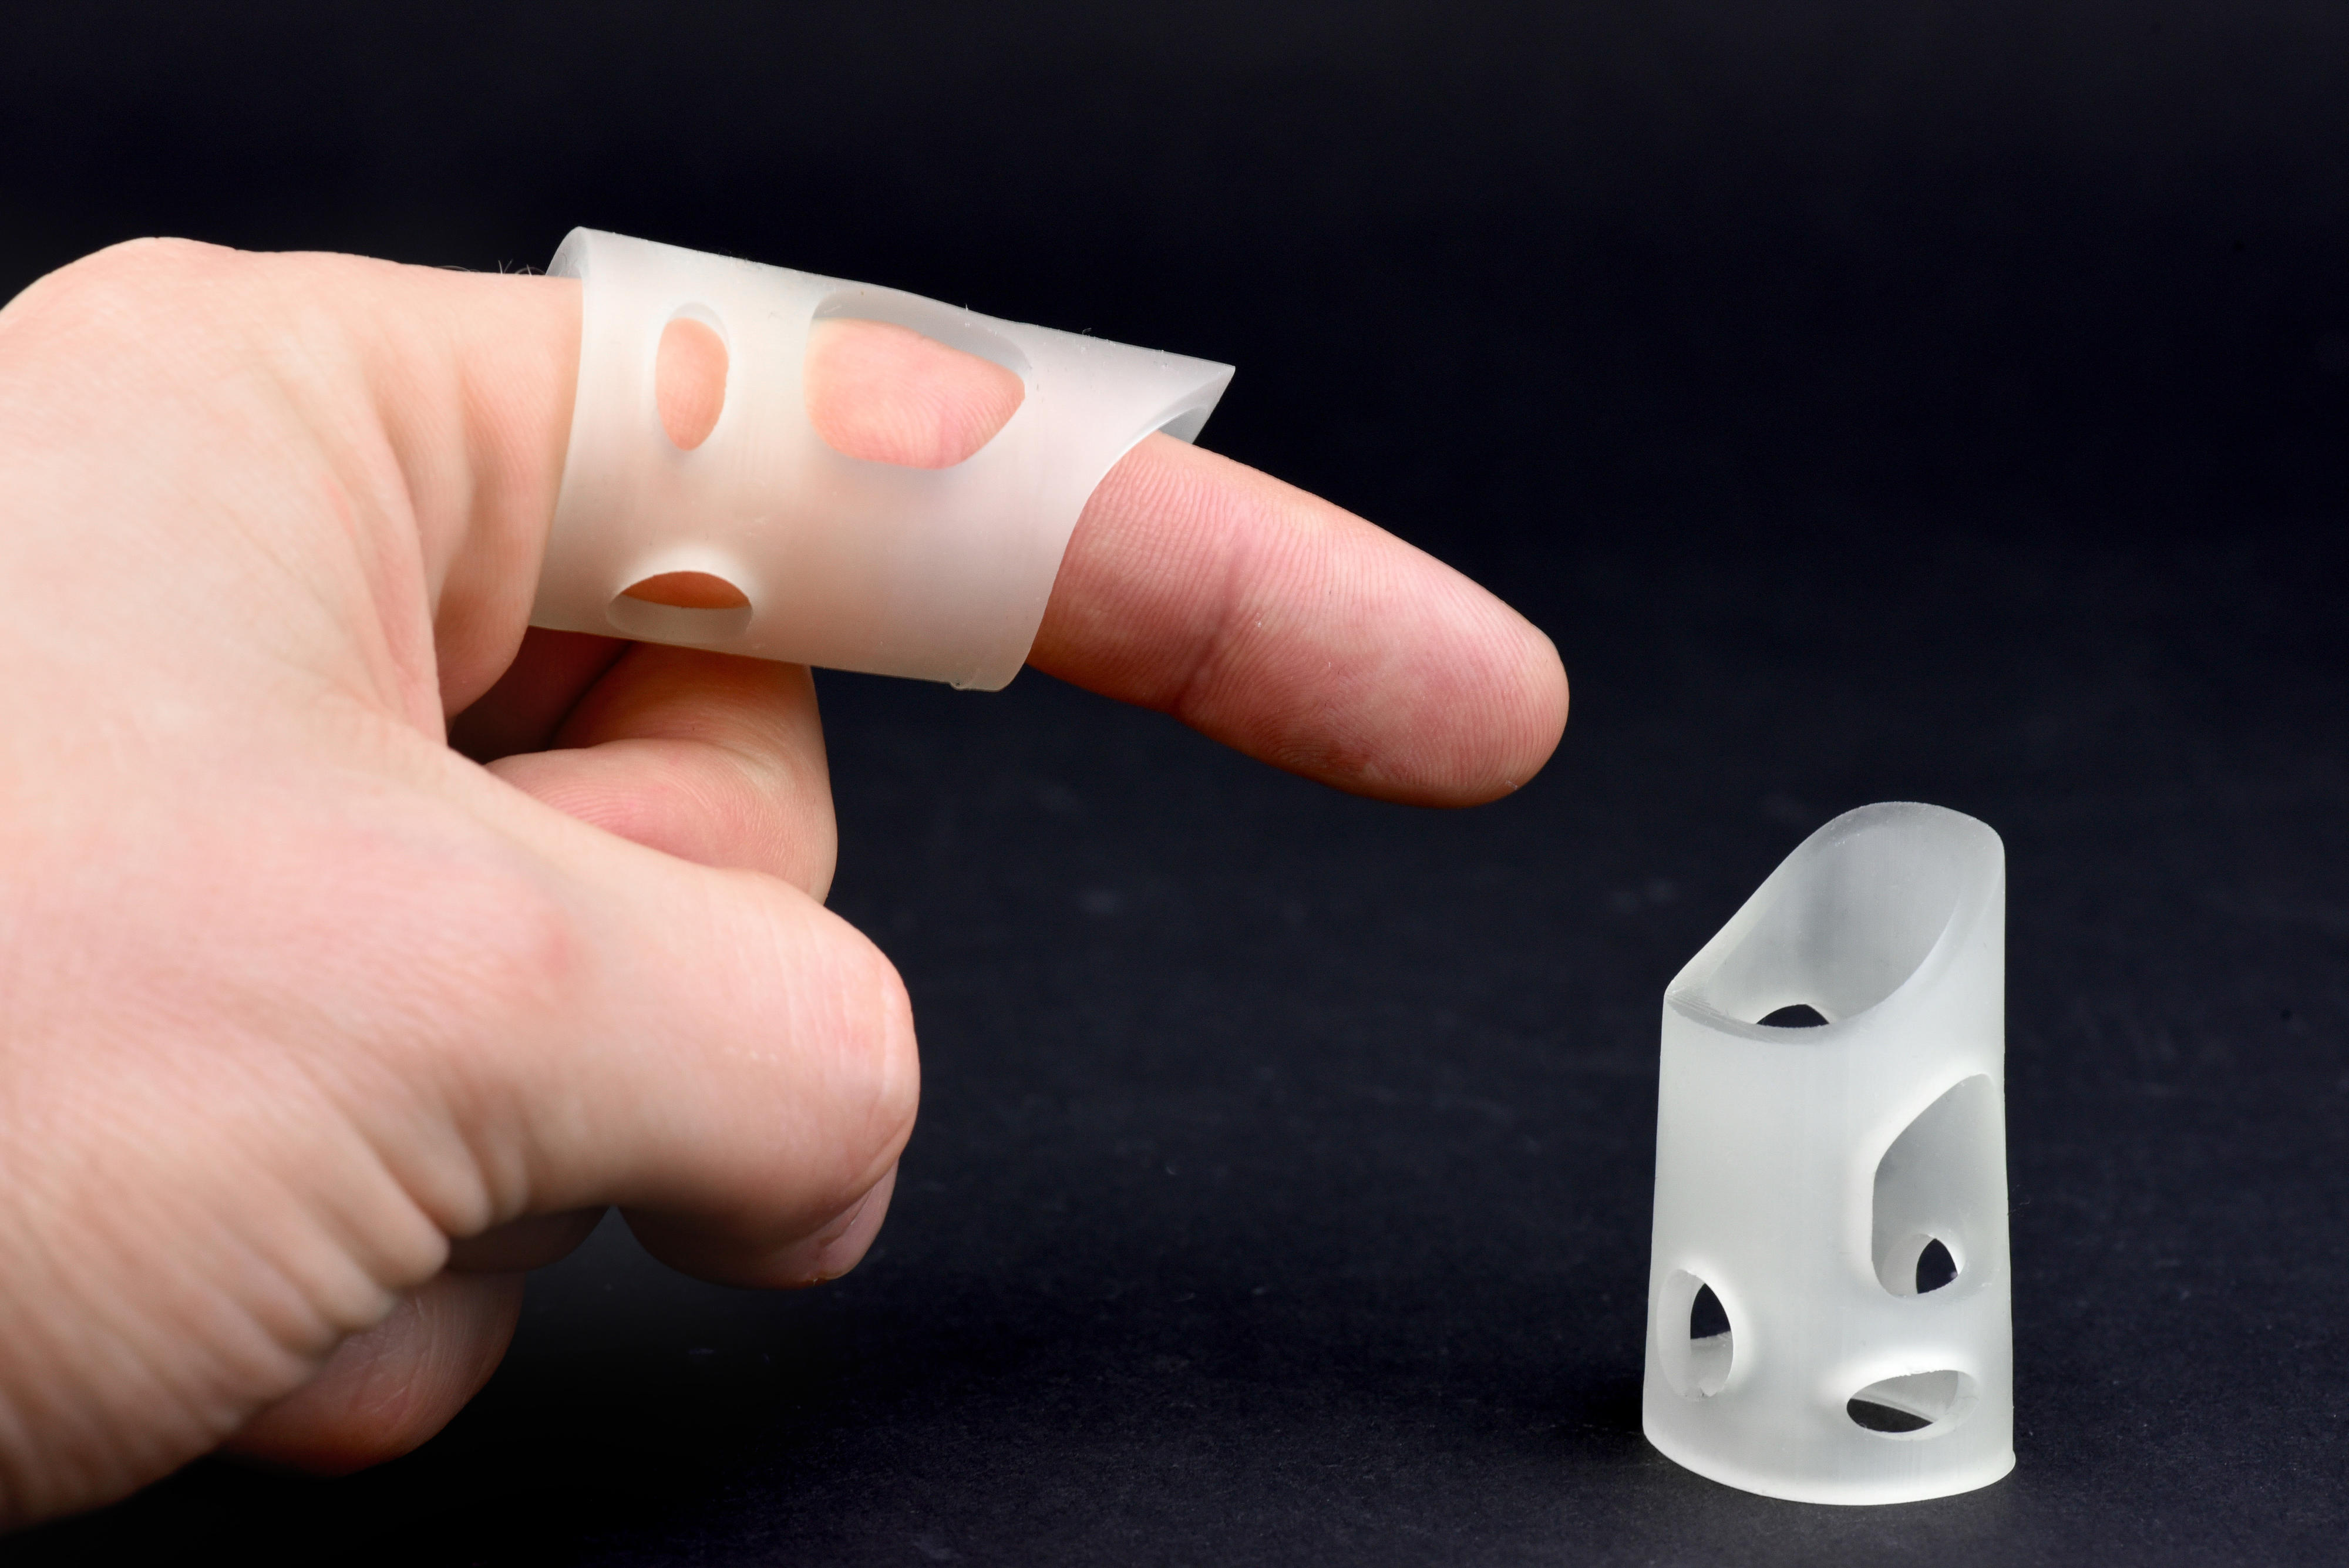 Finger splint 3D printed on Origin’s platform using Henkel silicone. It was printed according to ISO-10993 biocompatibility standards. Photo via Henkel.